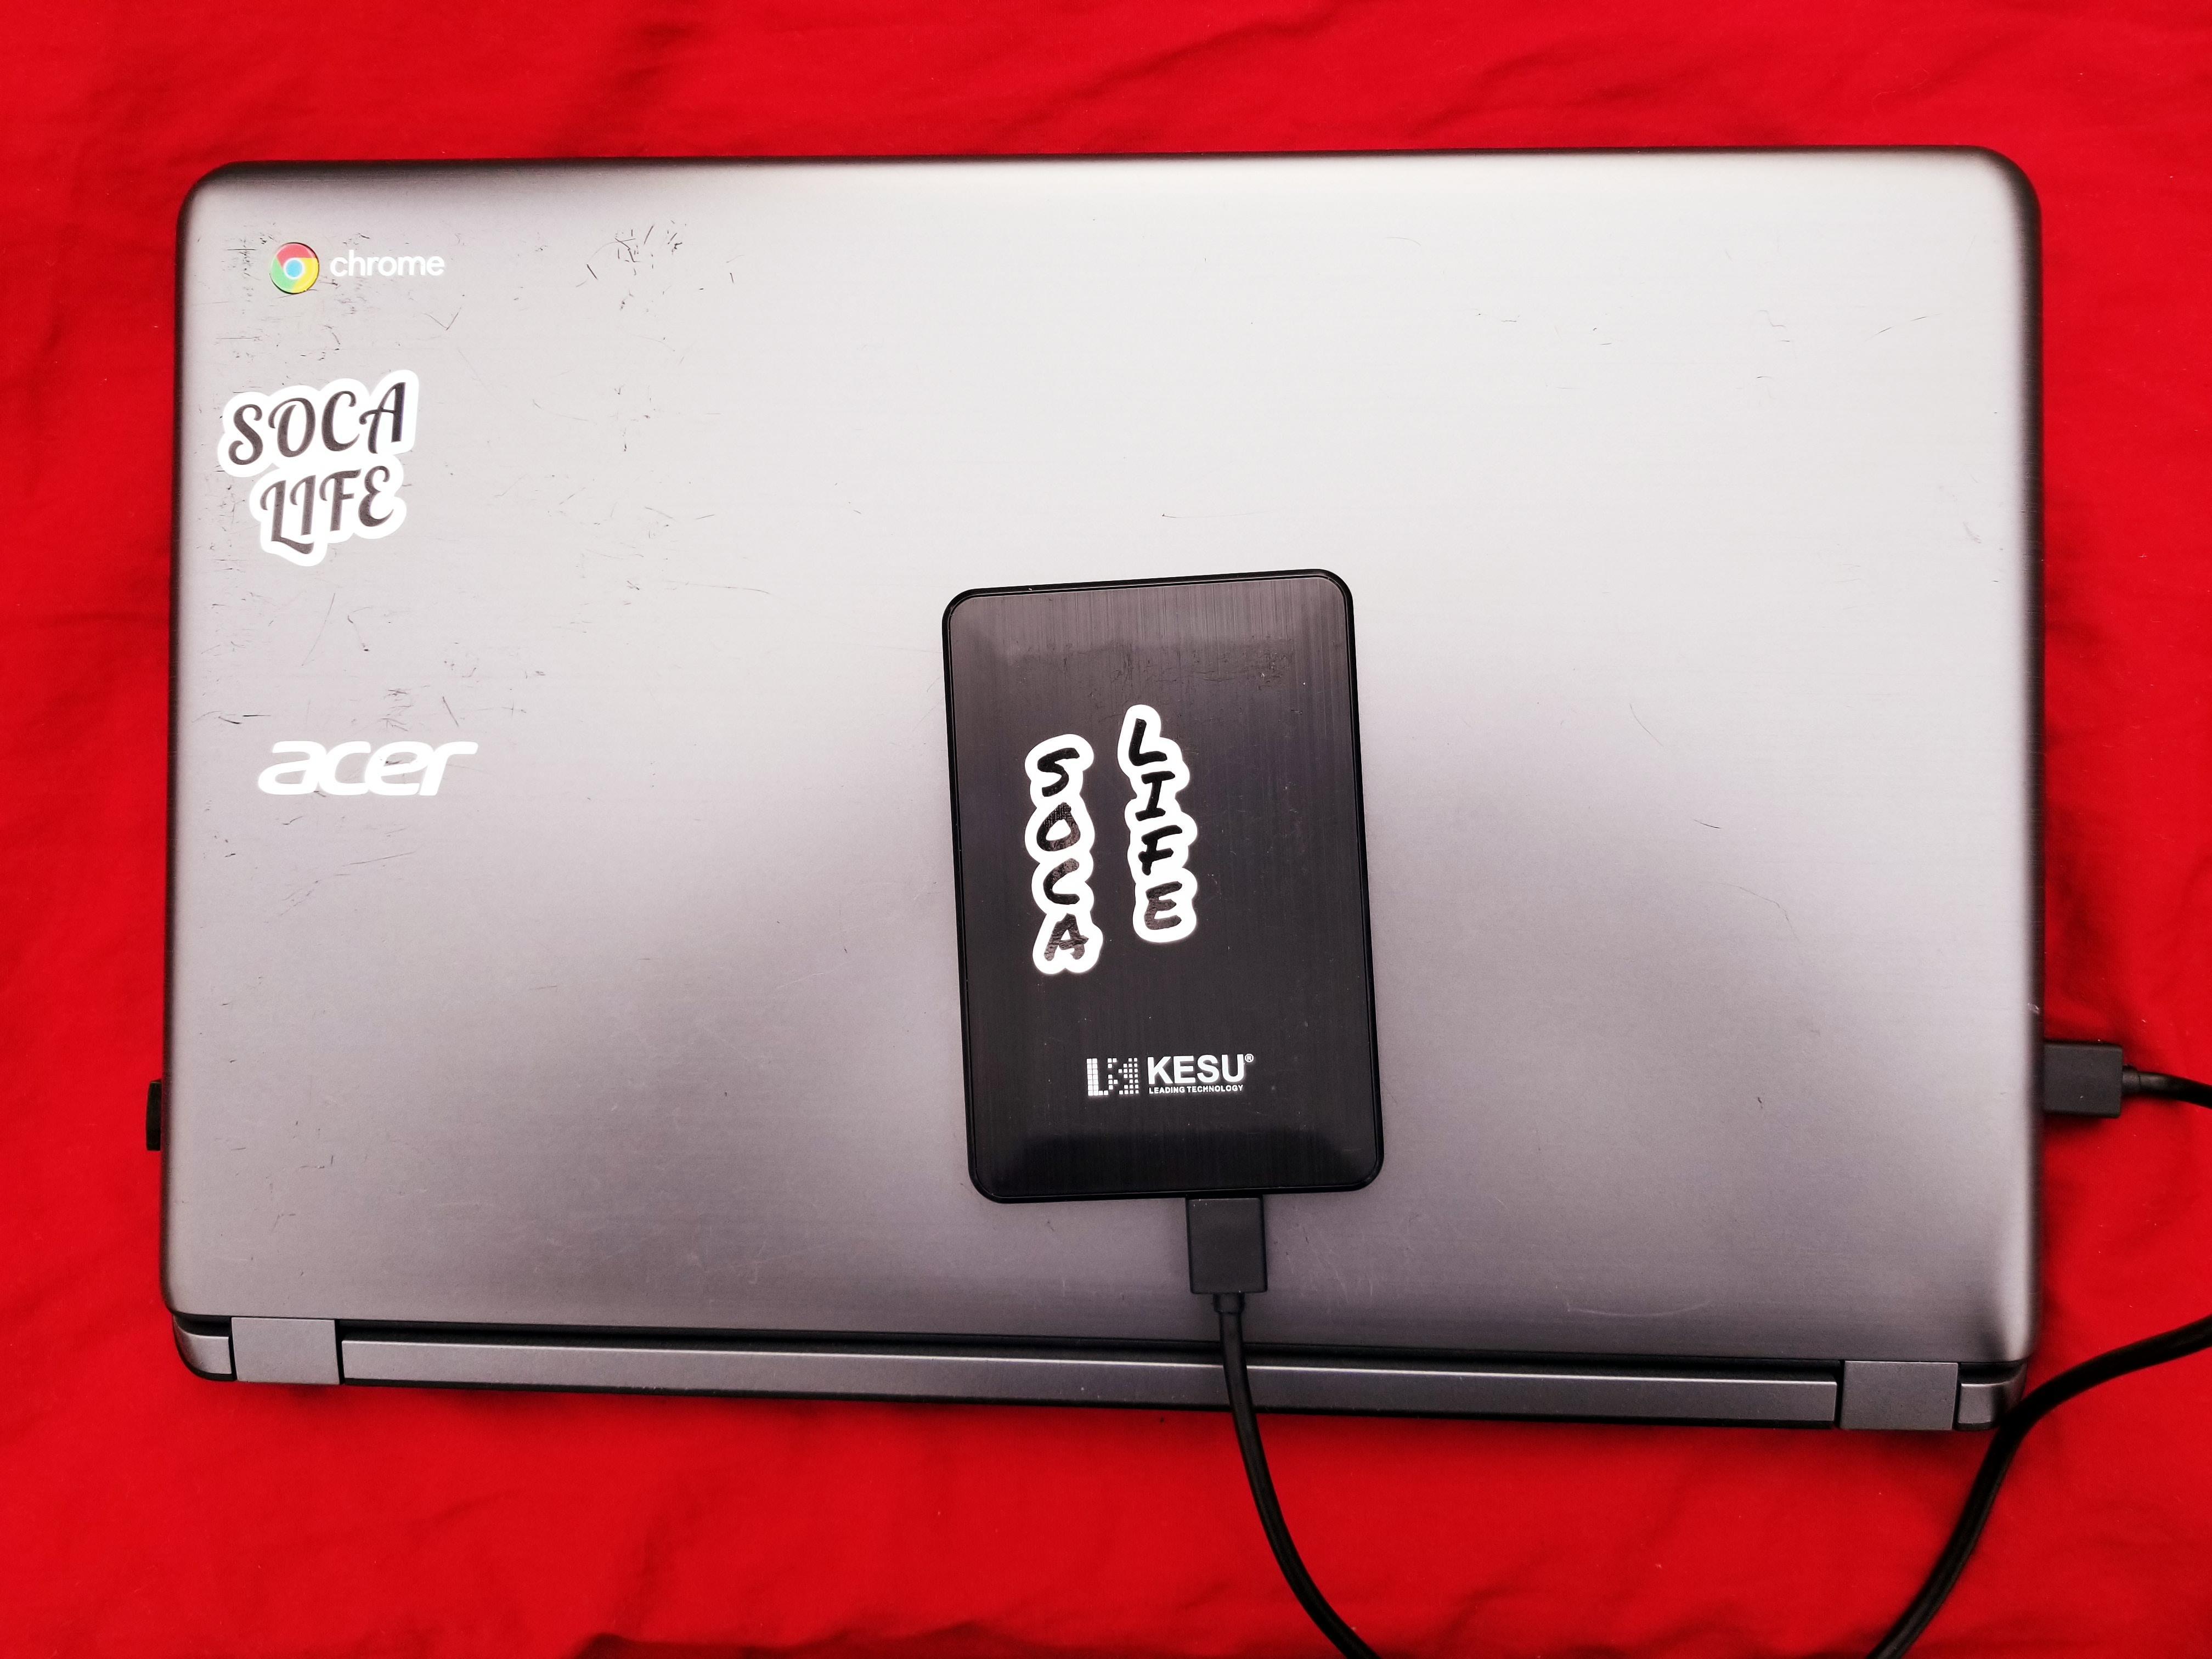 soca life sticker on laptop